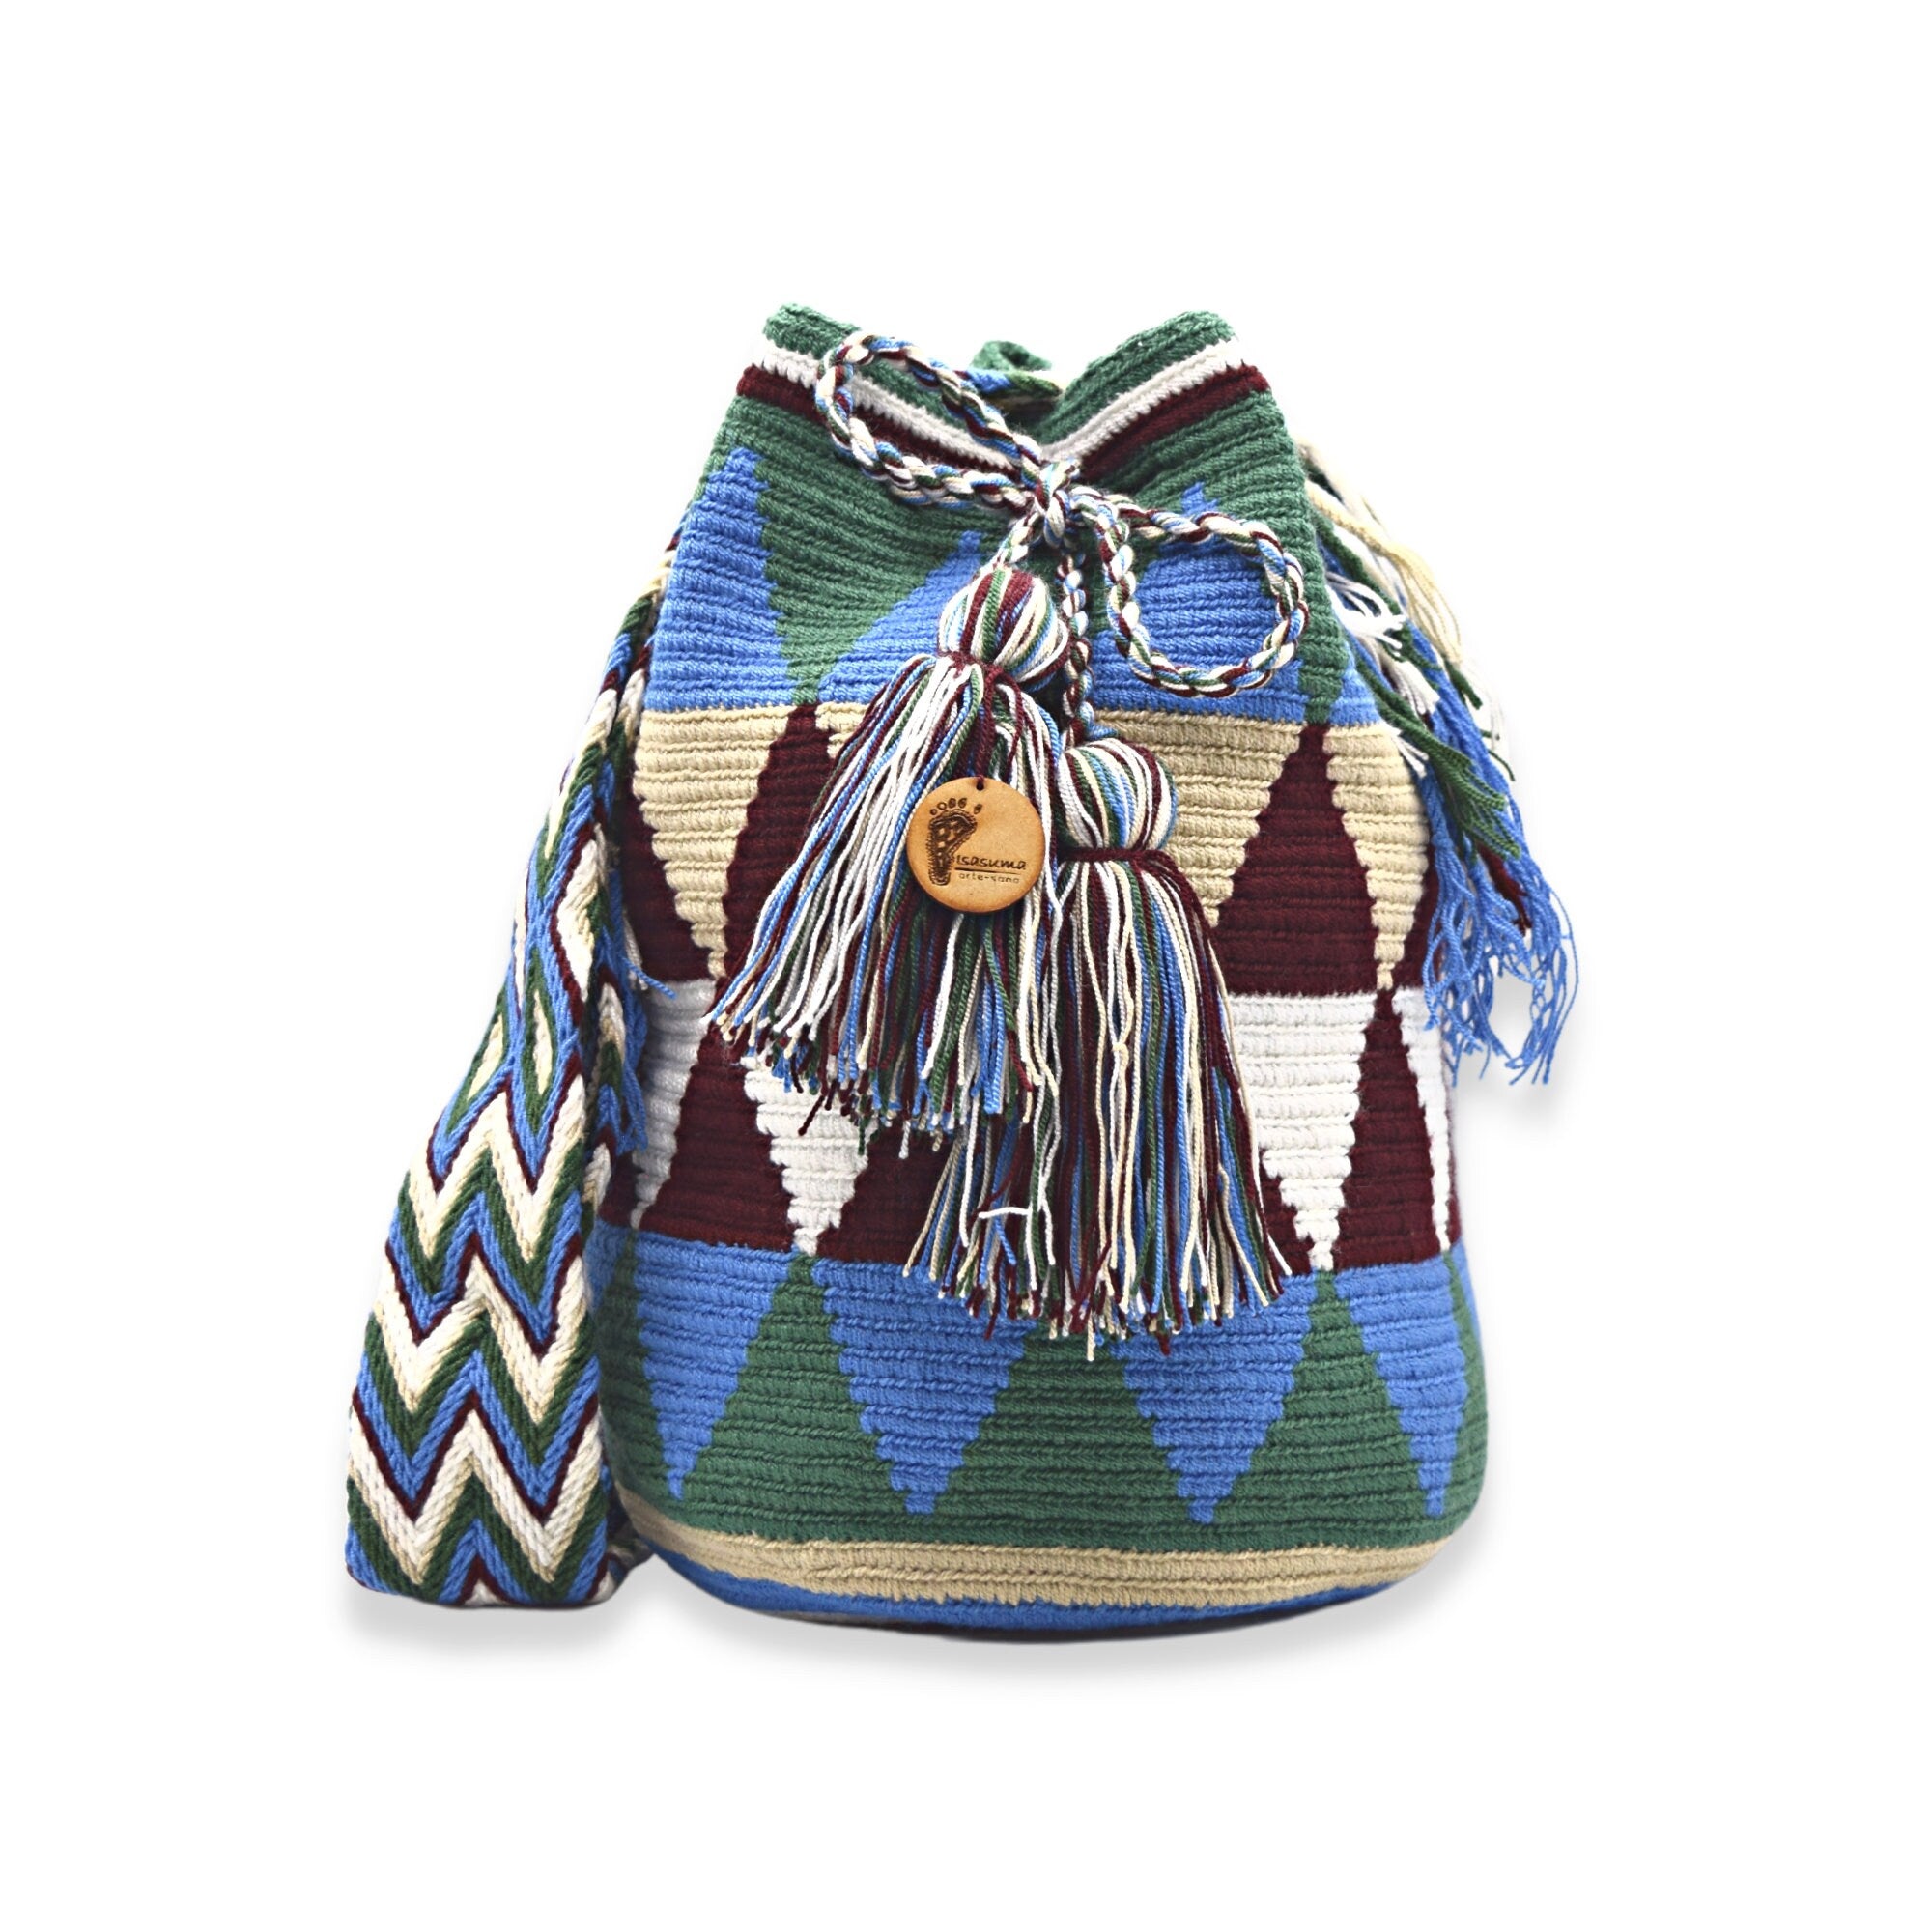 Wayuu mochila bag | Large Tradicional | Green blue beige and red sangria triangles